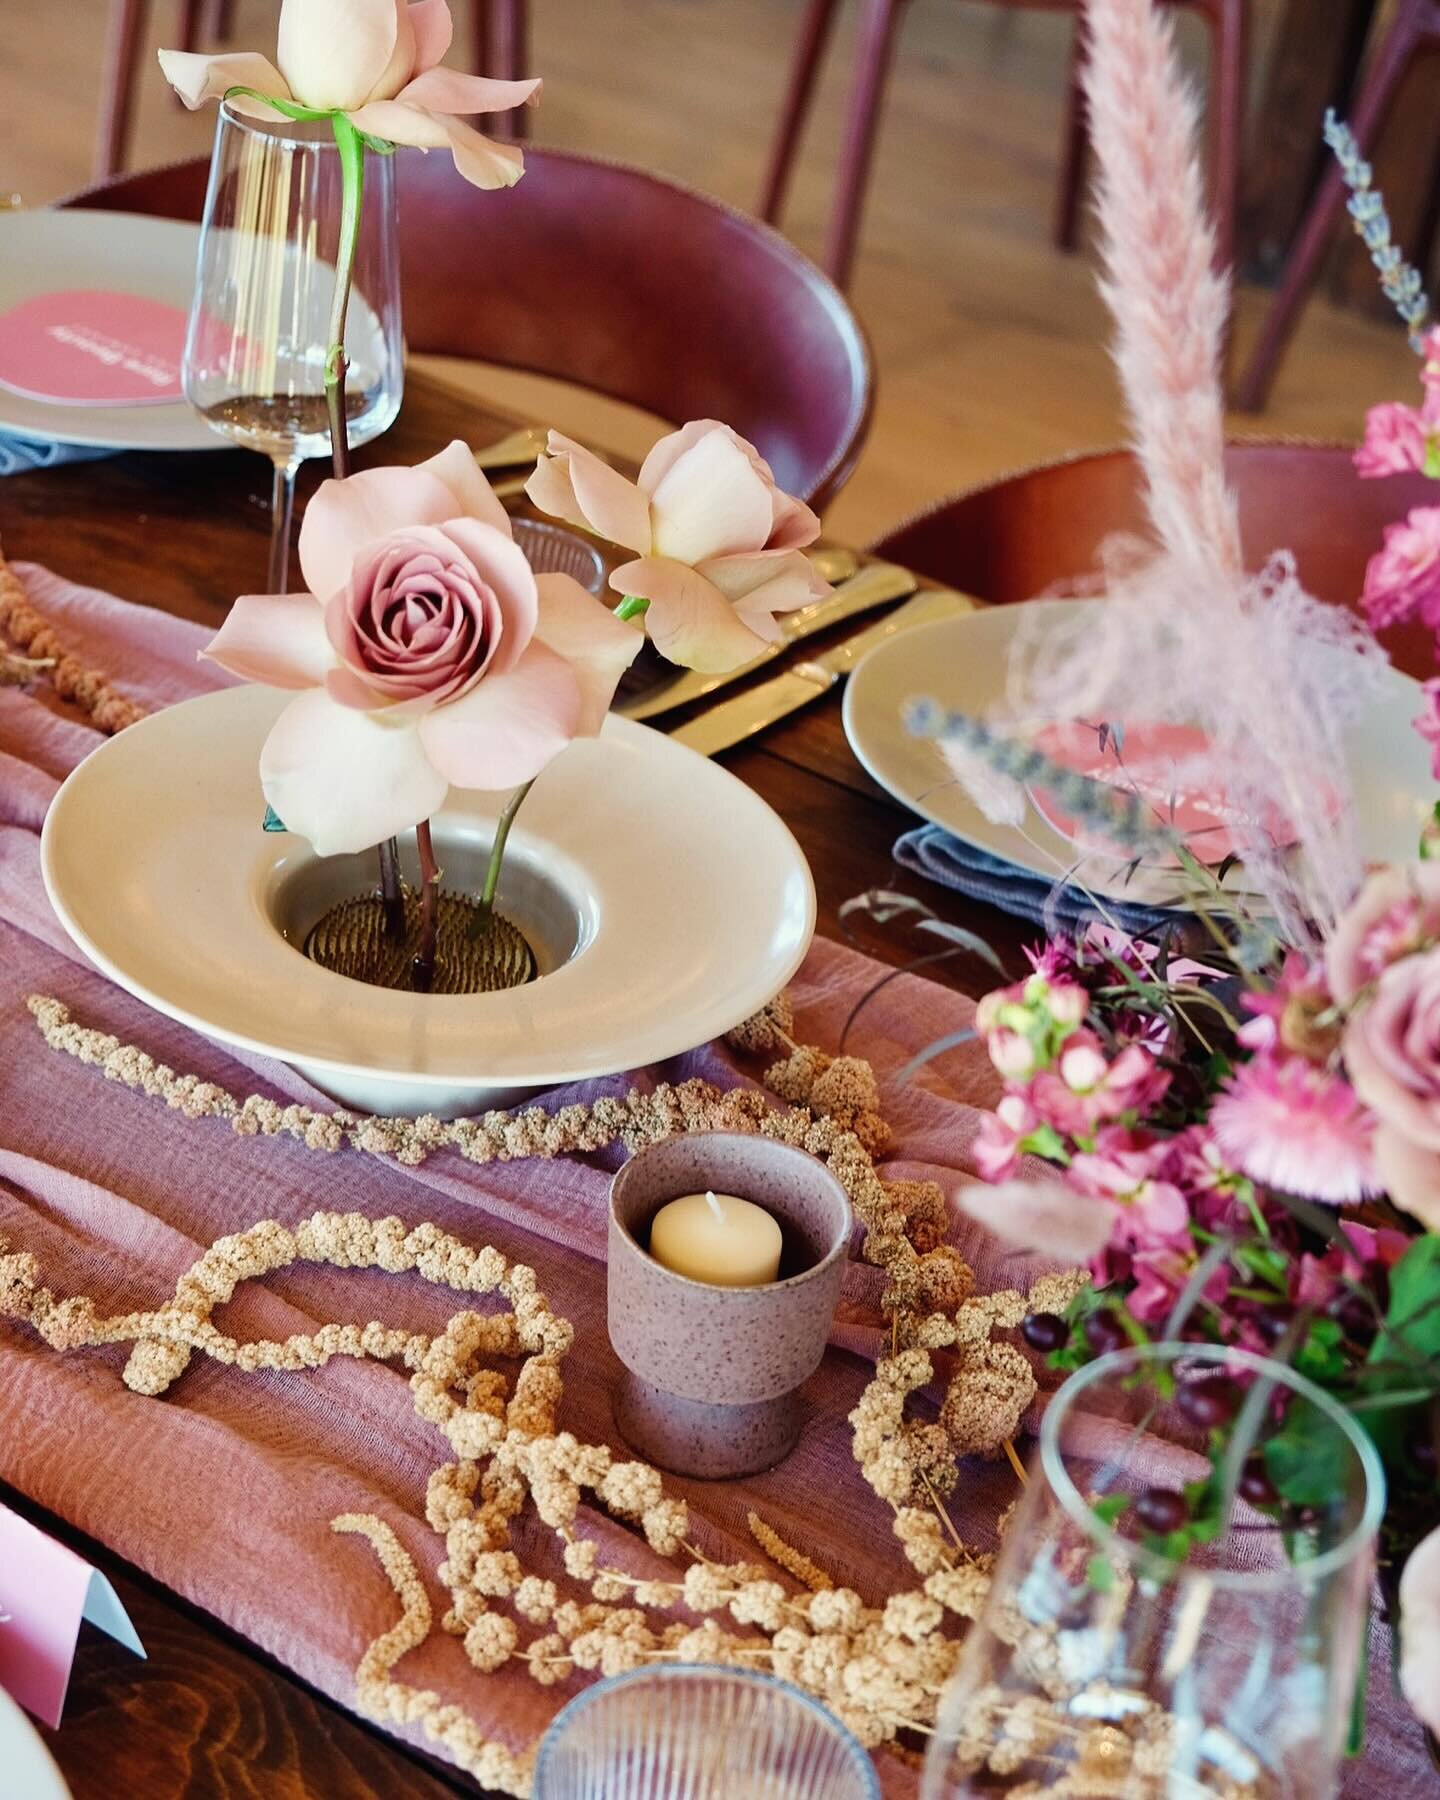 Find Comfort product launch event for @rarebeauty by @selenagomez 

#rarebeauty #eventflorals #floraldesign #eventflowers #eventdesign #selenagomez #flowersofinstagram #petalcreek #tablescape